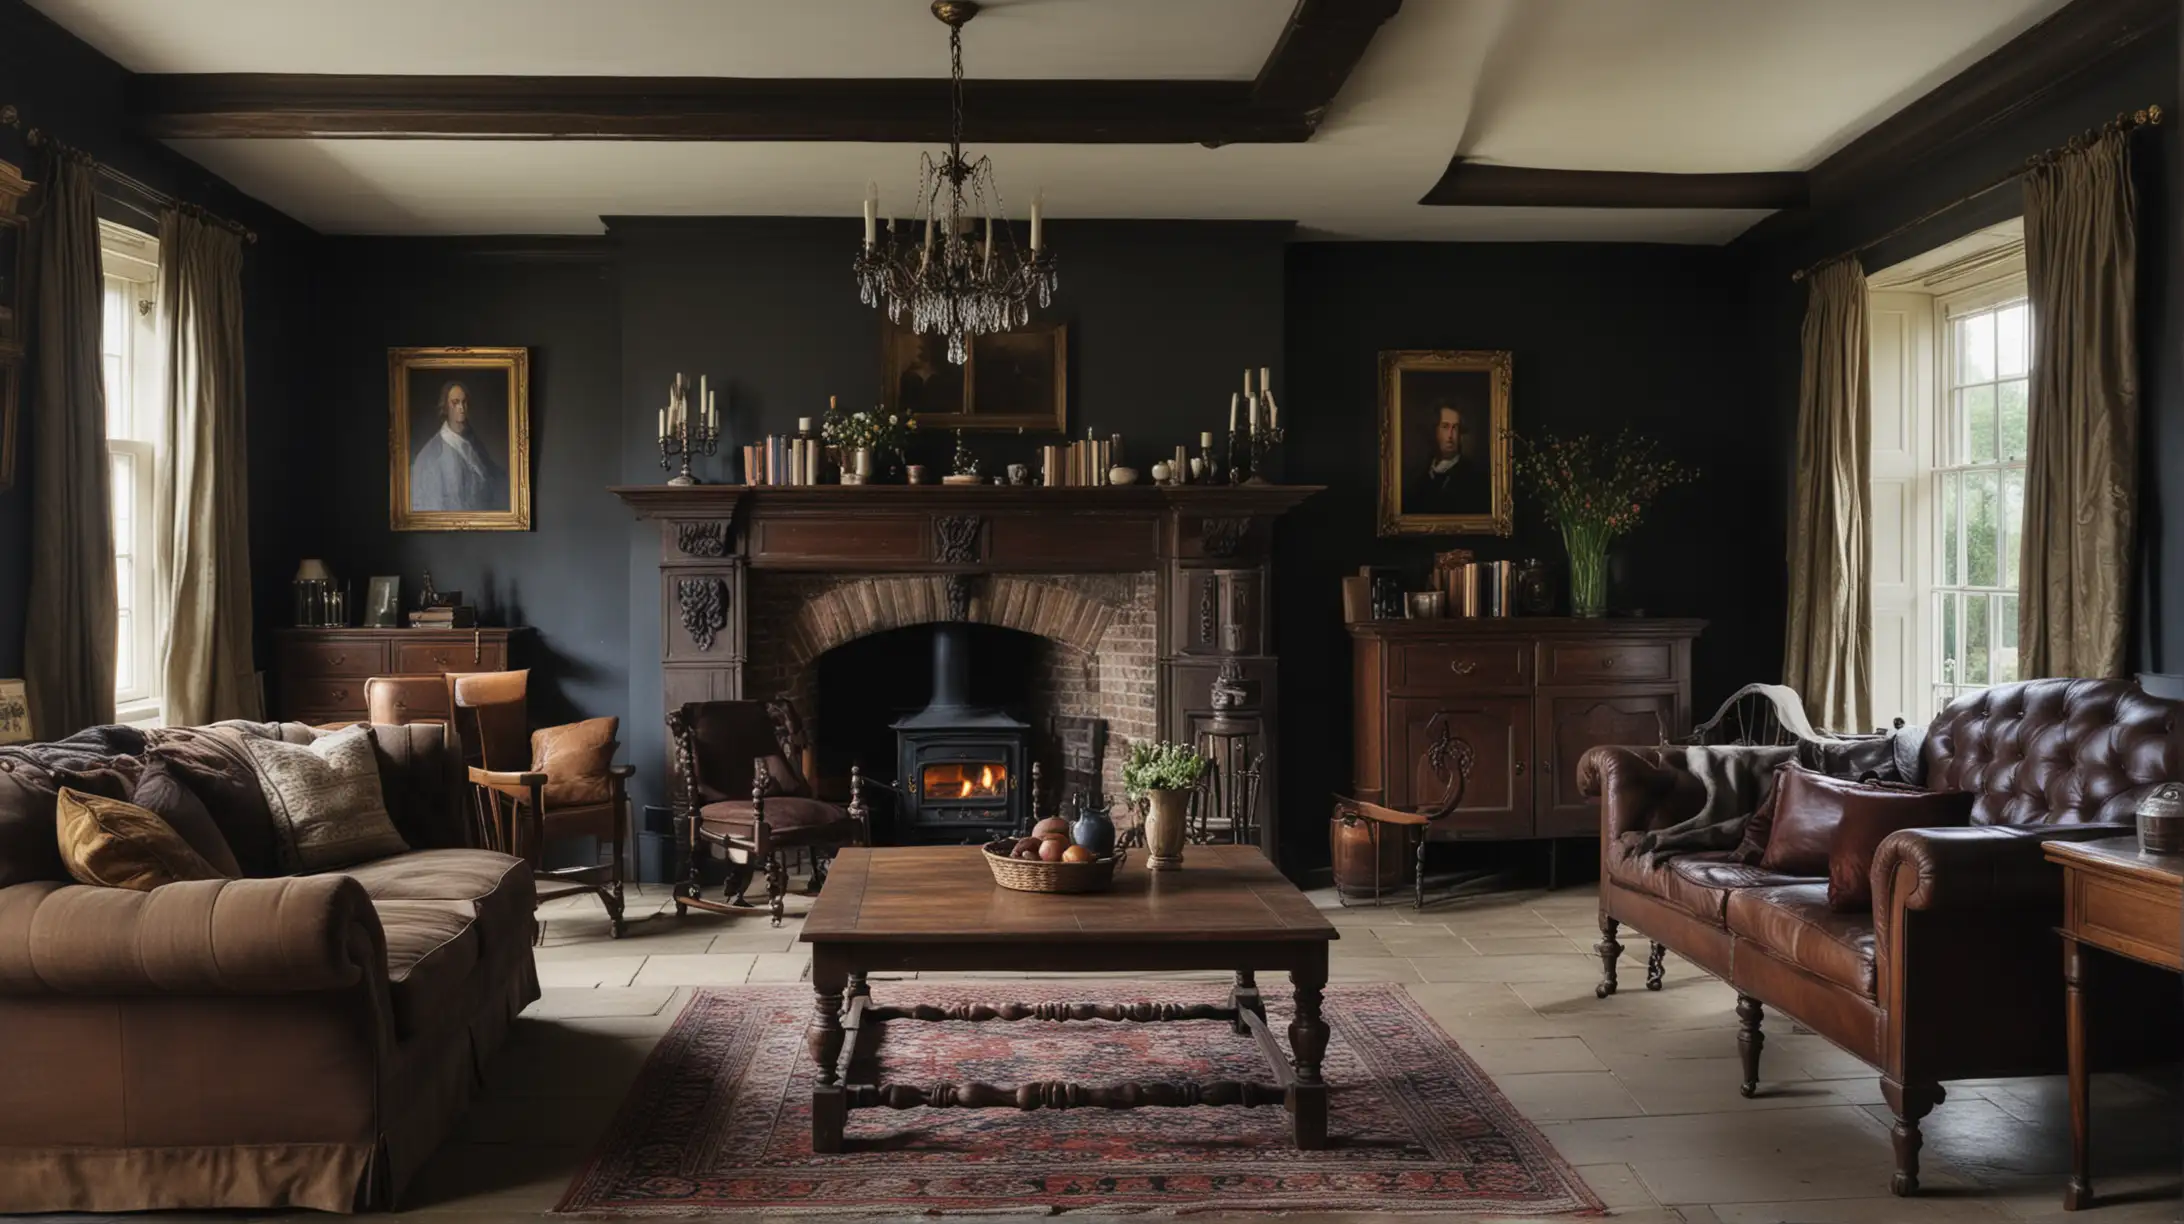 Dark Old English Interior with Vintage Furniture